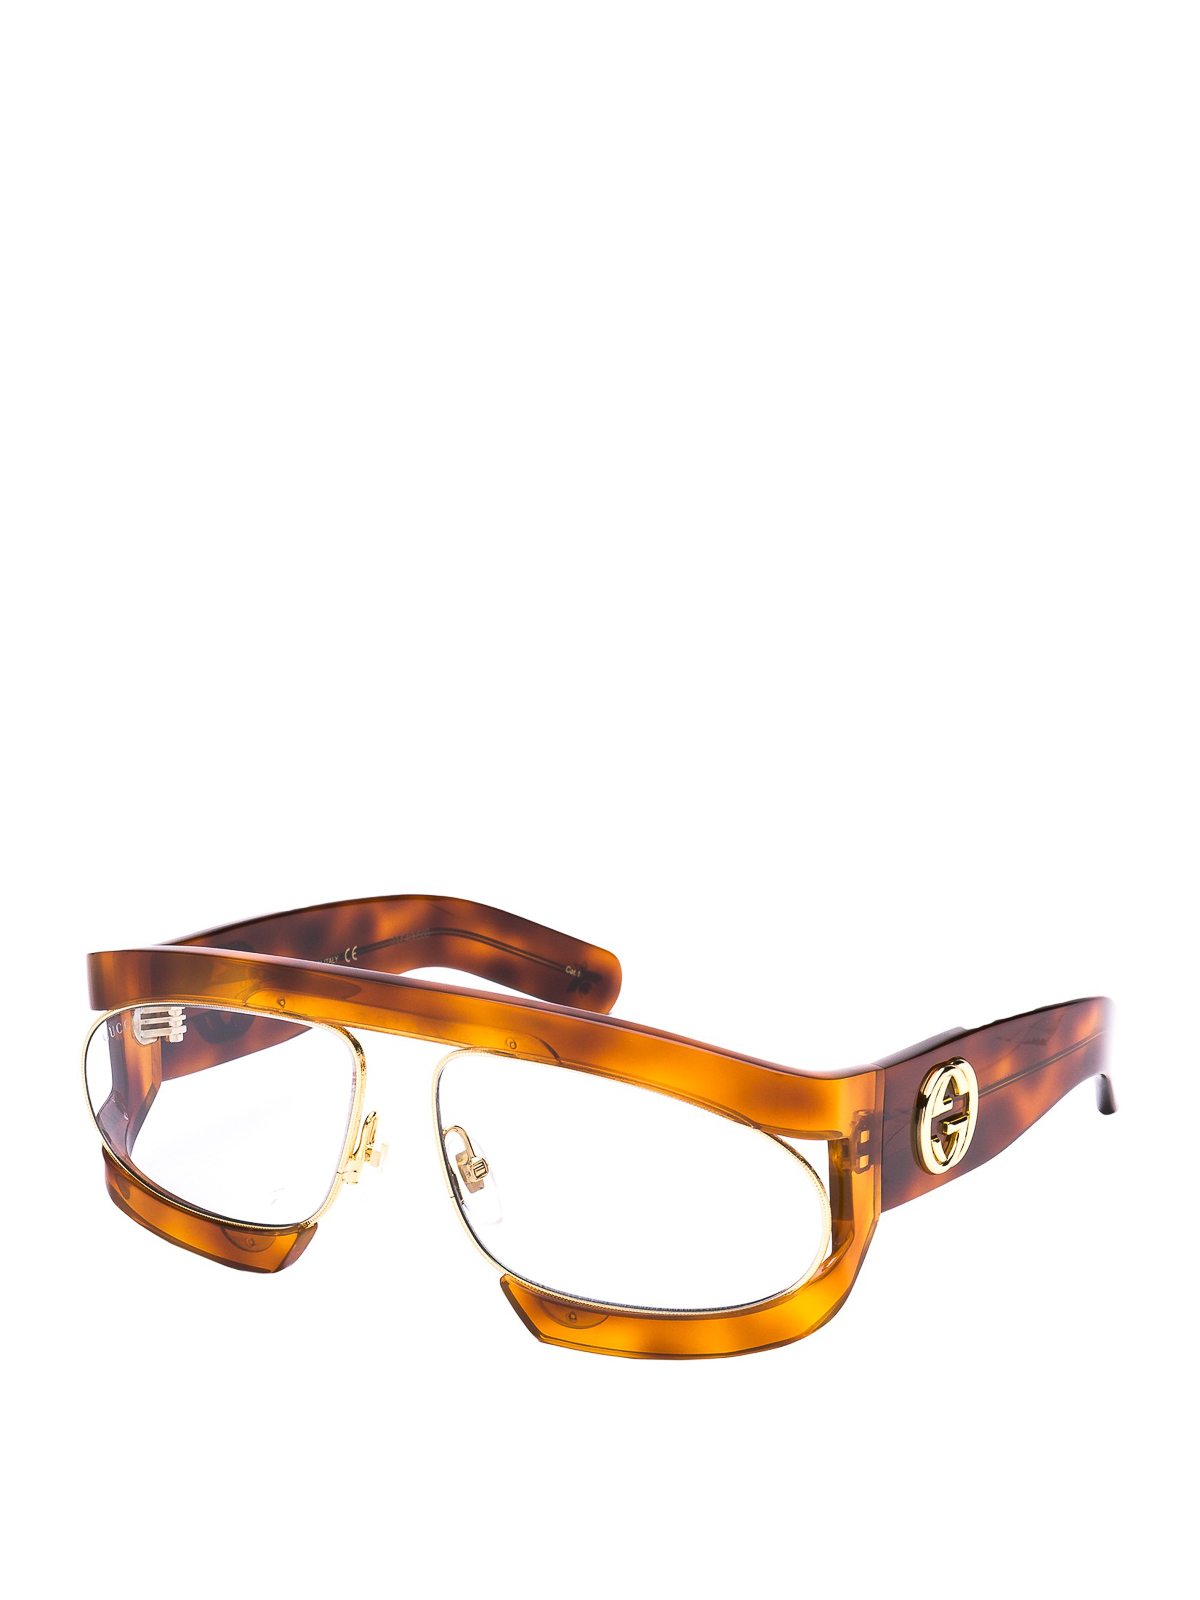 Sunglasses Gucci - Tortoiseshell effect sunglasses with GG logo -  494328J0740001